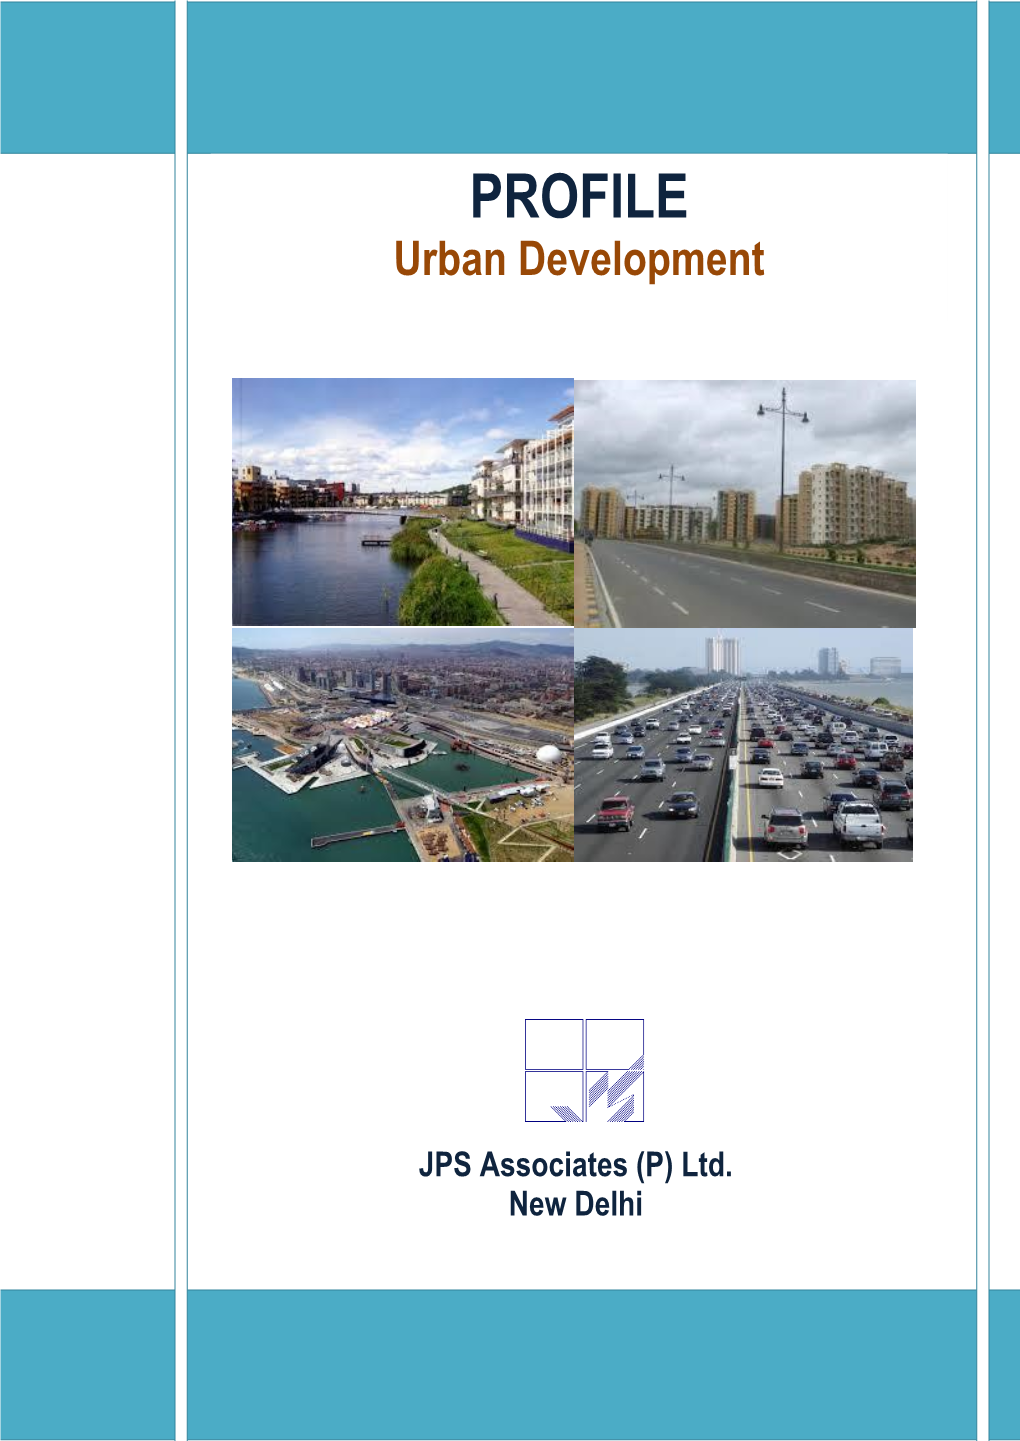 JPS Associates (P) Ltd